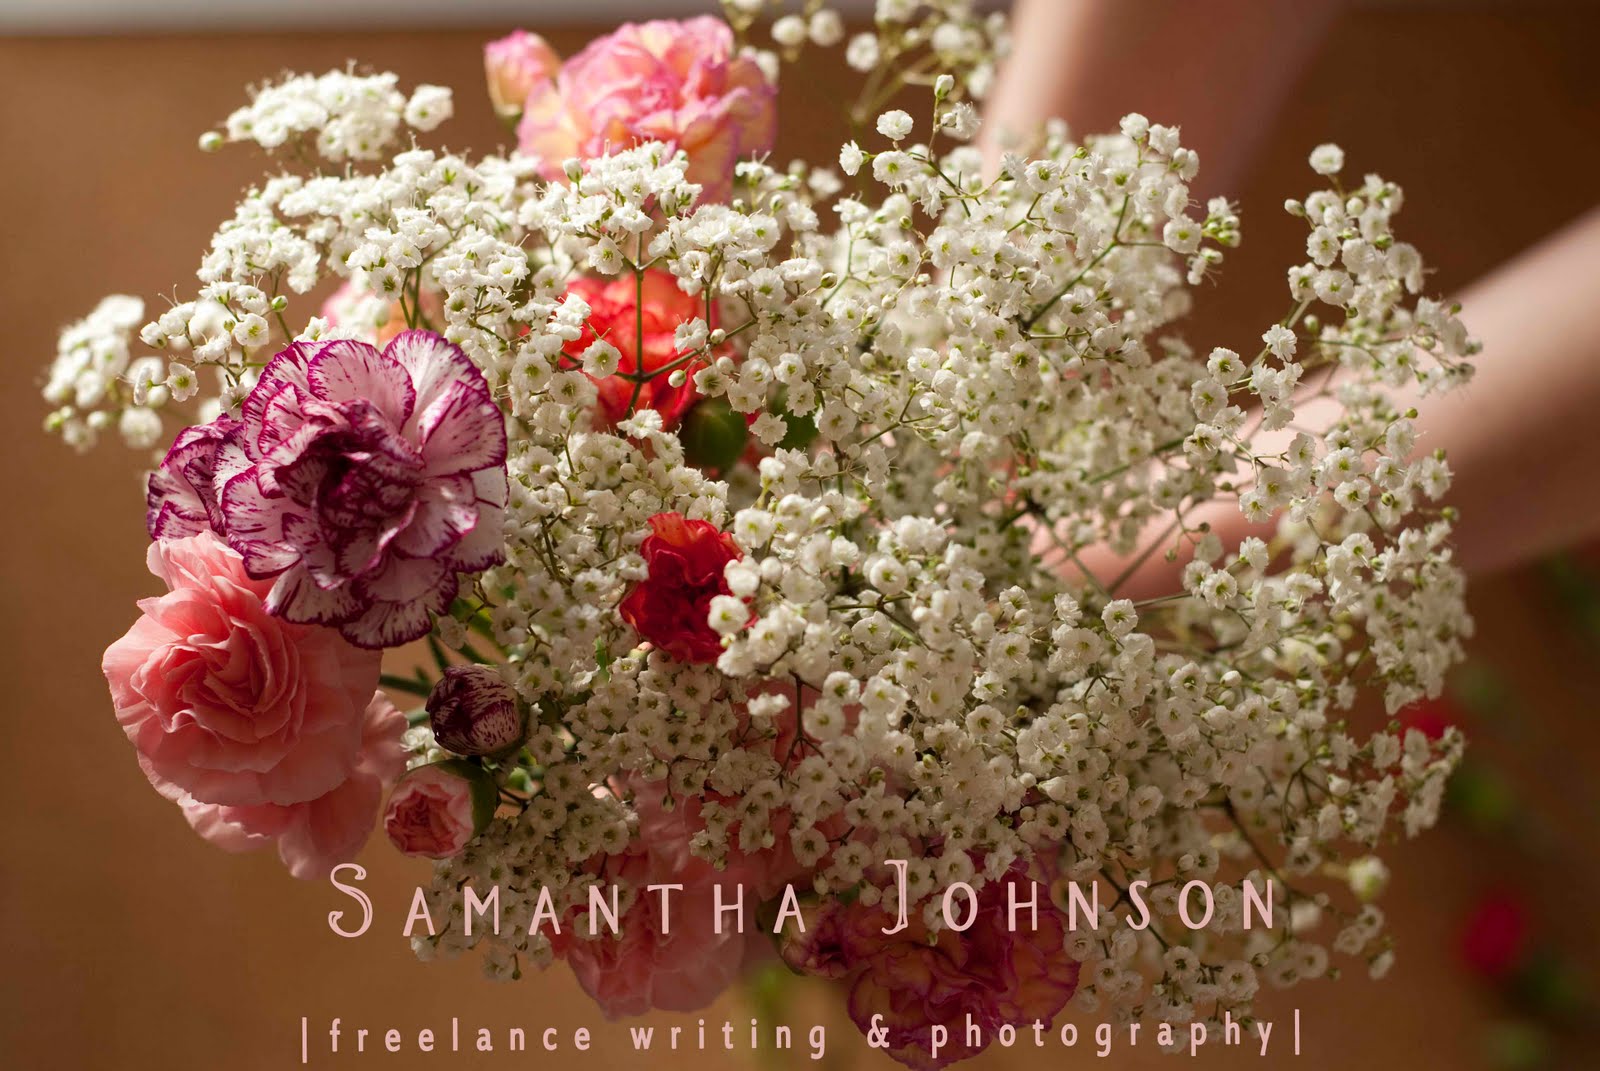 Samantha Johnson, Freelance Writing, Editing, & Photography